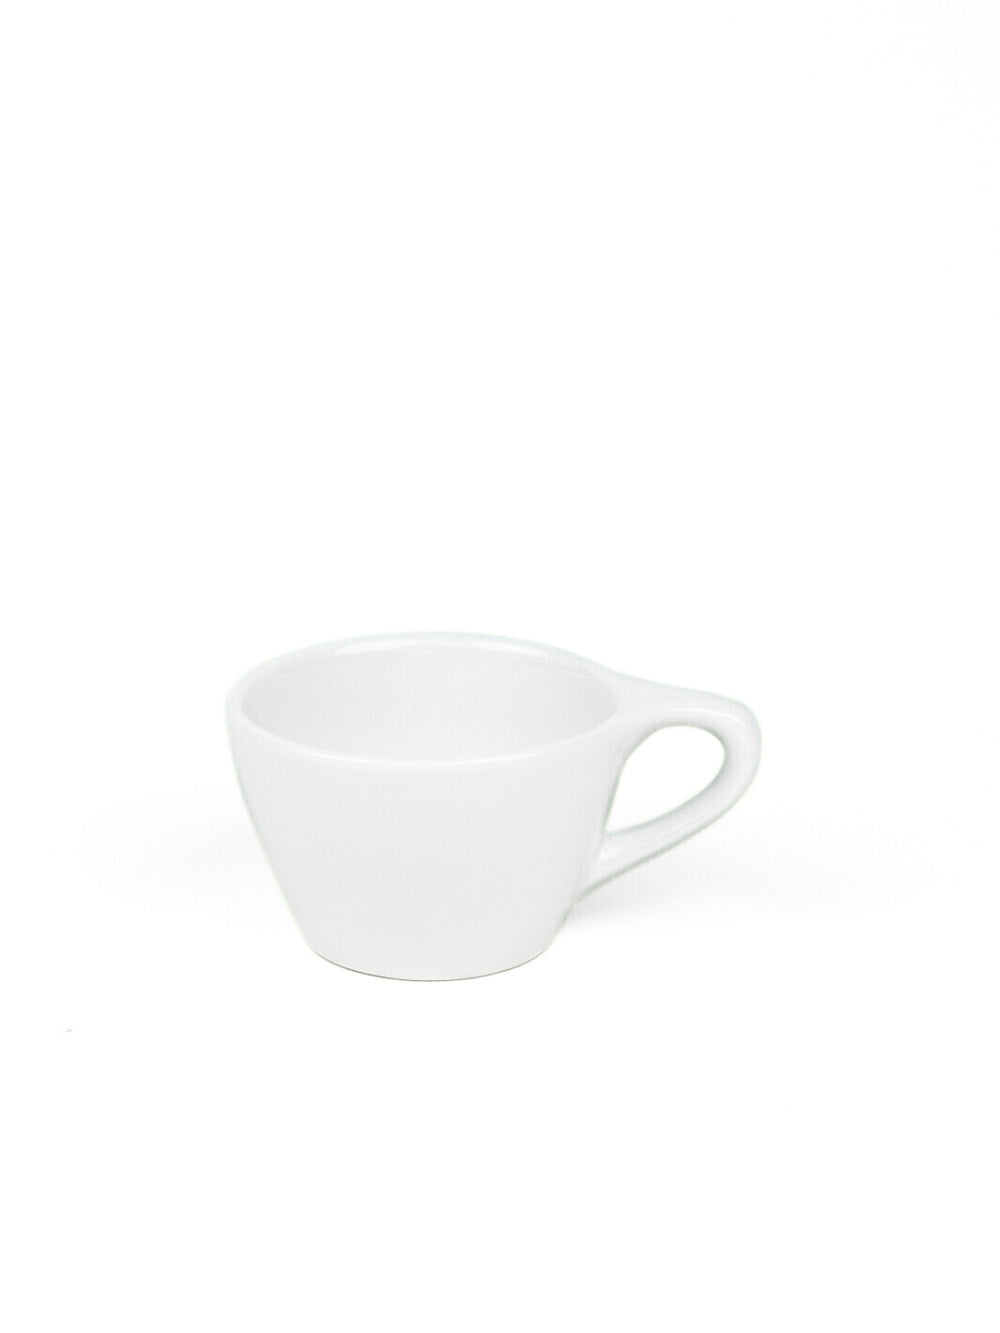 .com  LIFVER Tea Cup and Saucer Set, 8 Ounces Porcelain